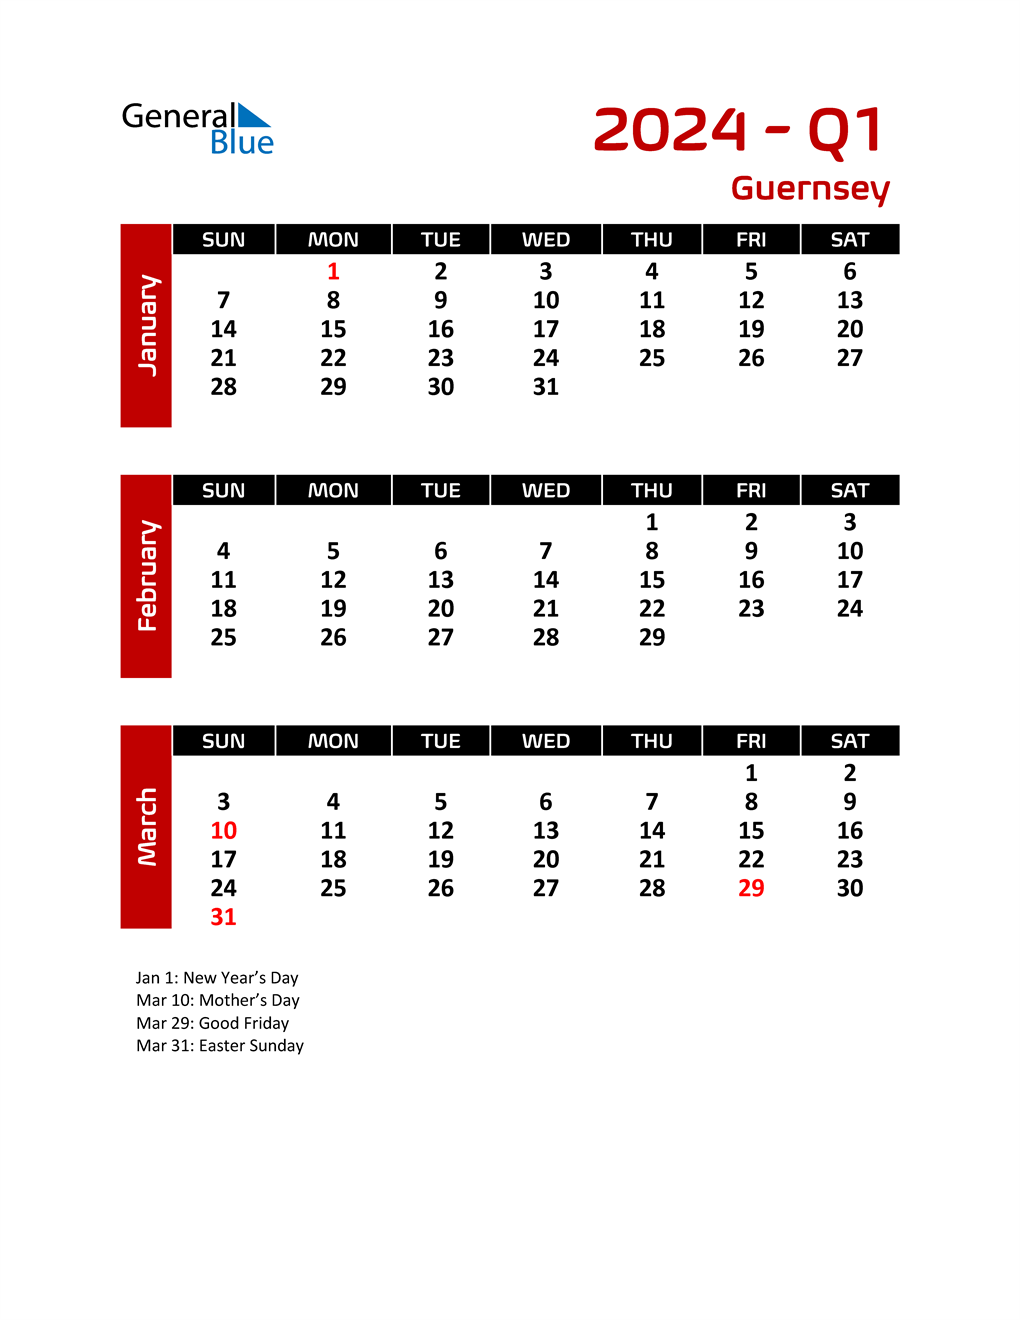 Q1 2024 Quarterly Calendar for Guernsey